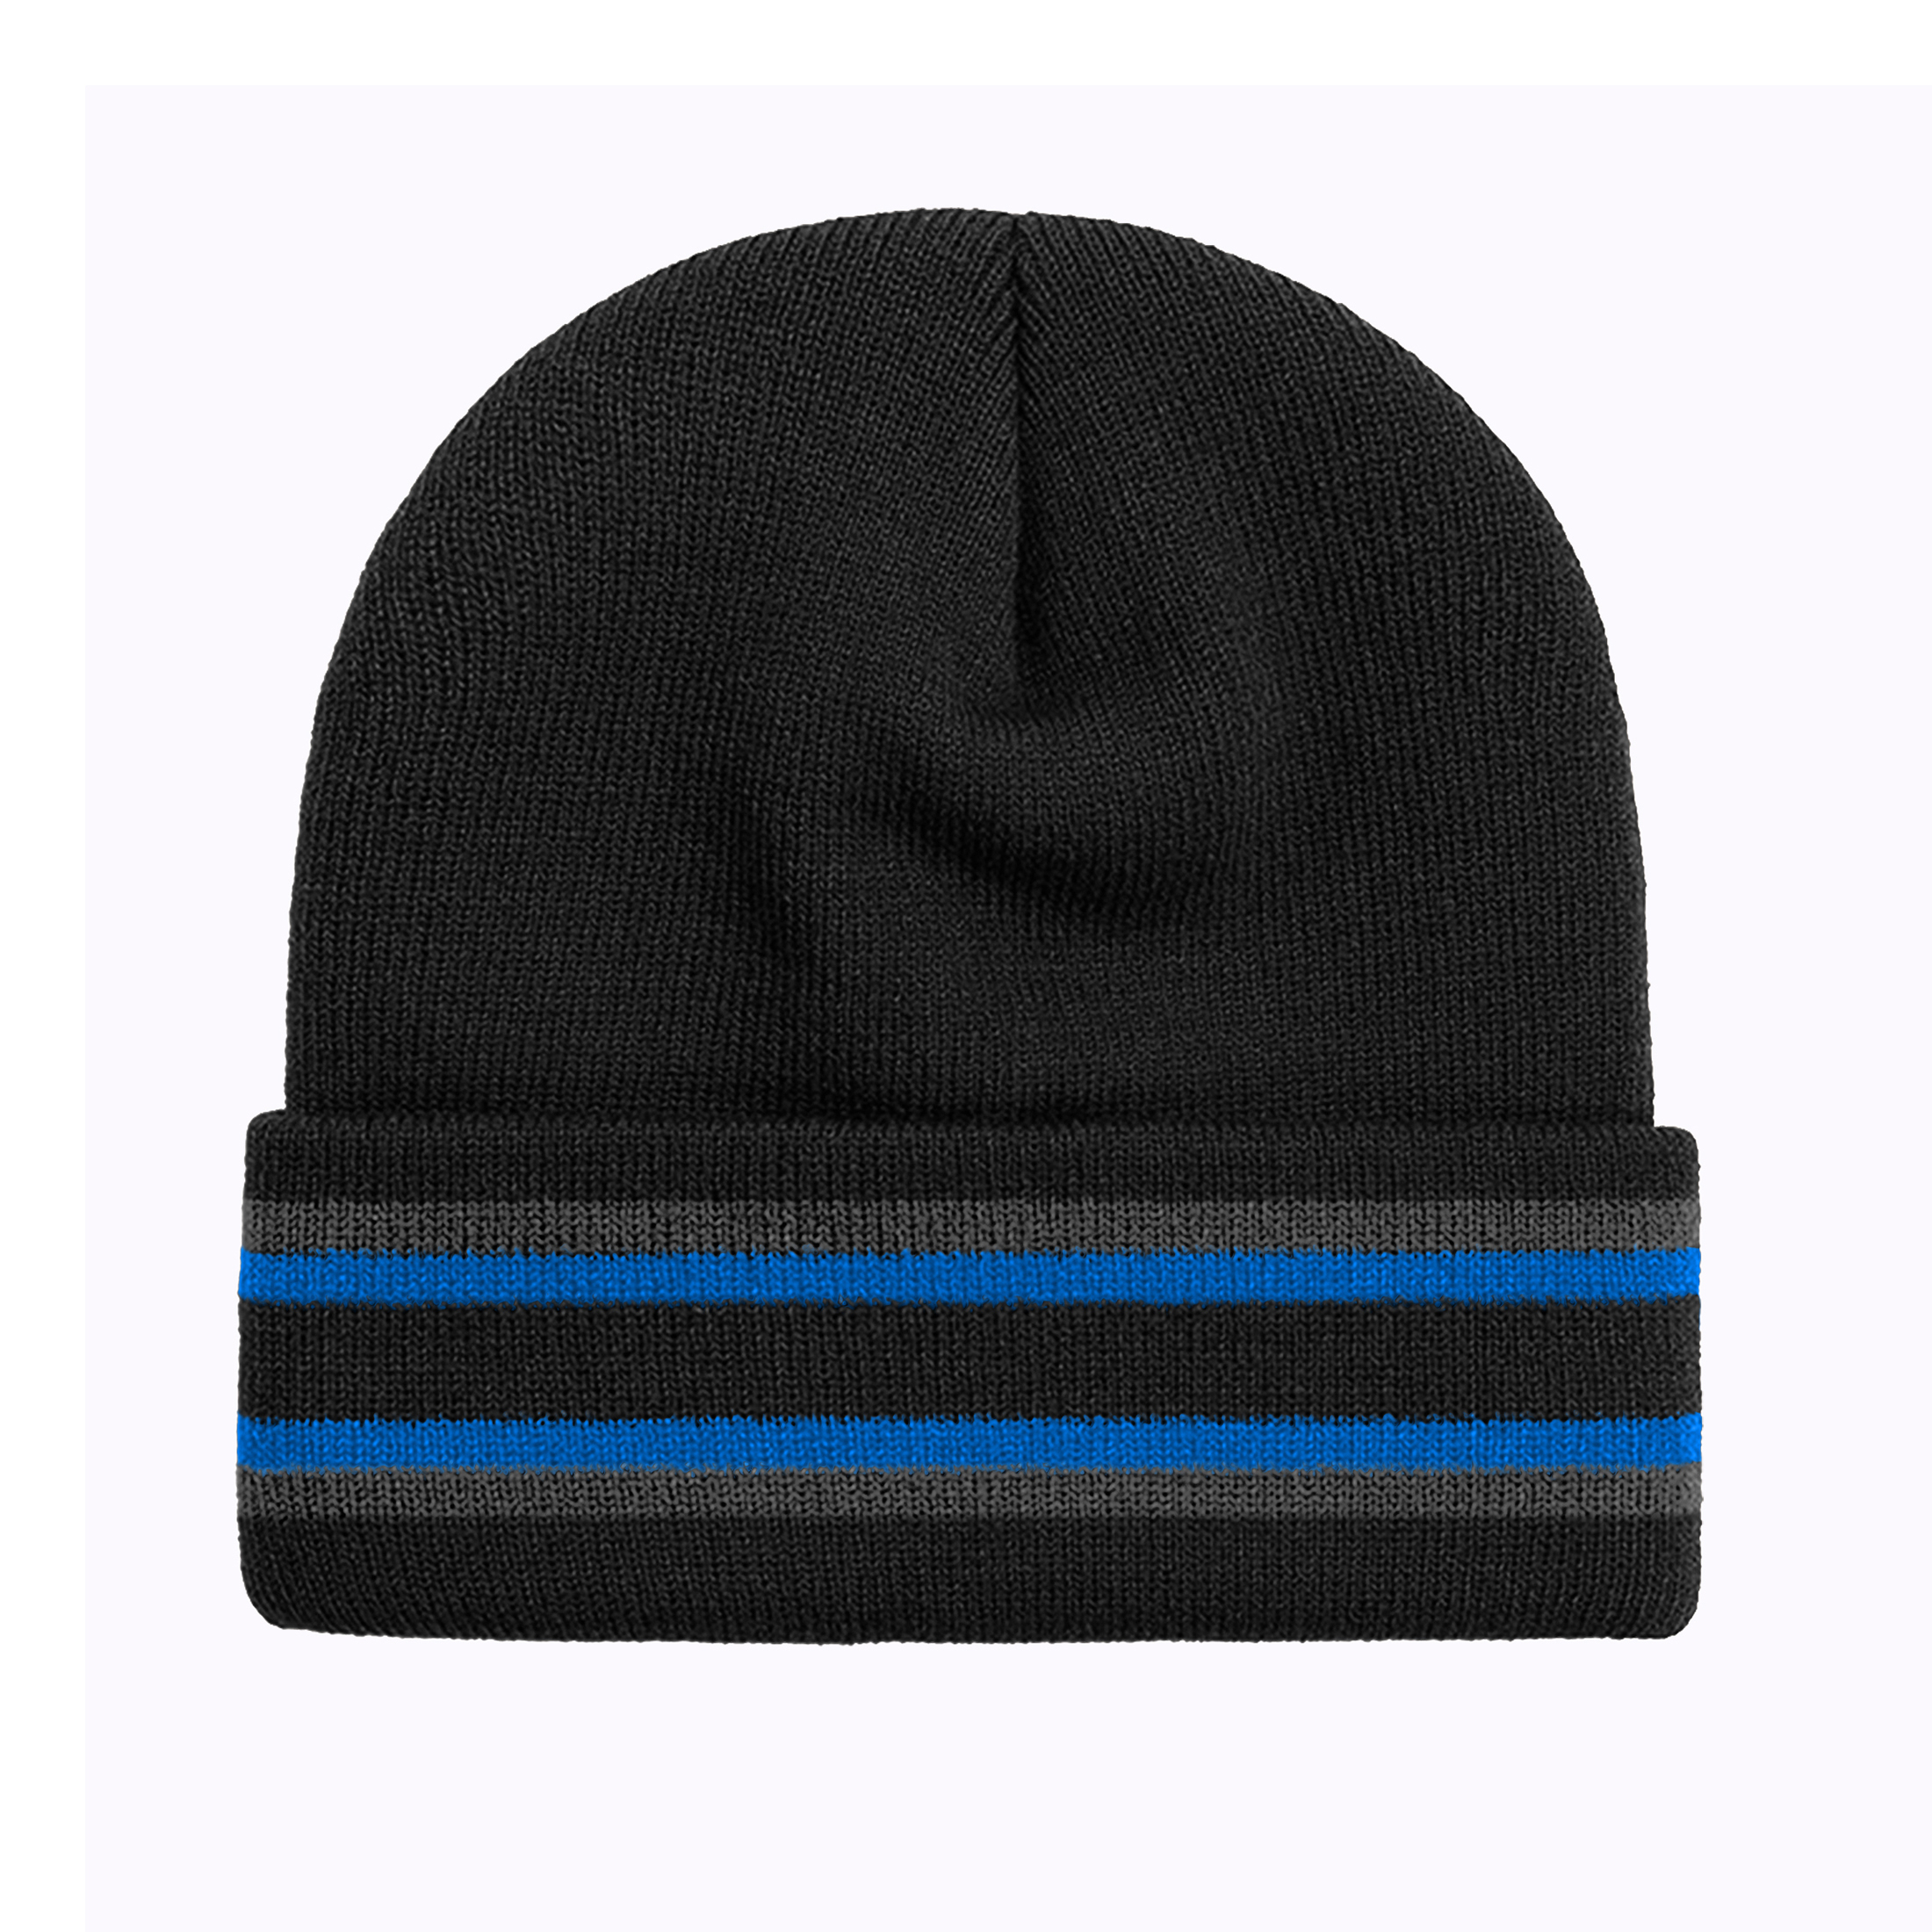 2-Pack: Men's Warm Knit Cuffed Cap Beanie Hat W/ Faux Fur Lining - Solid